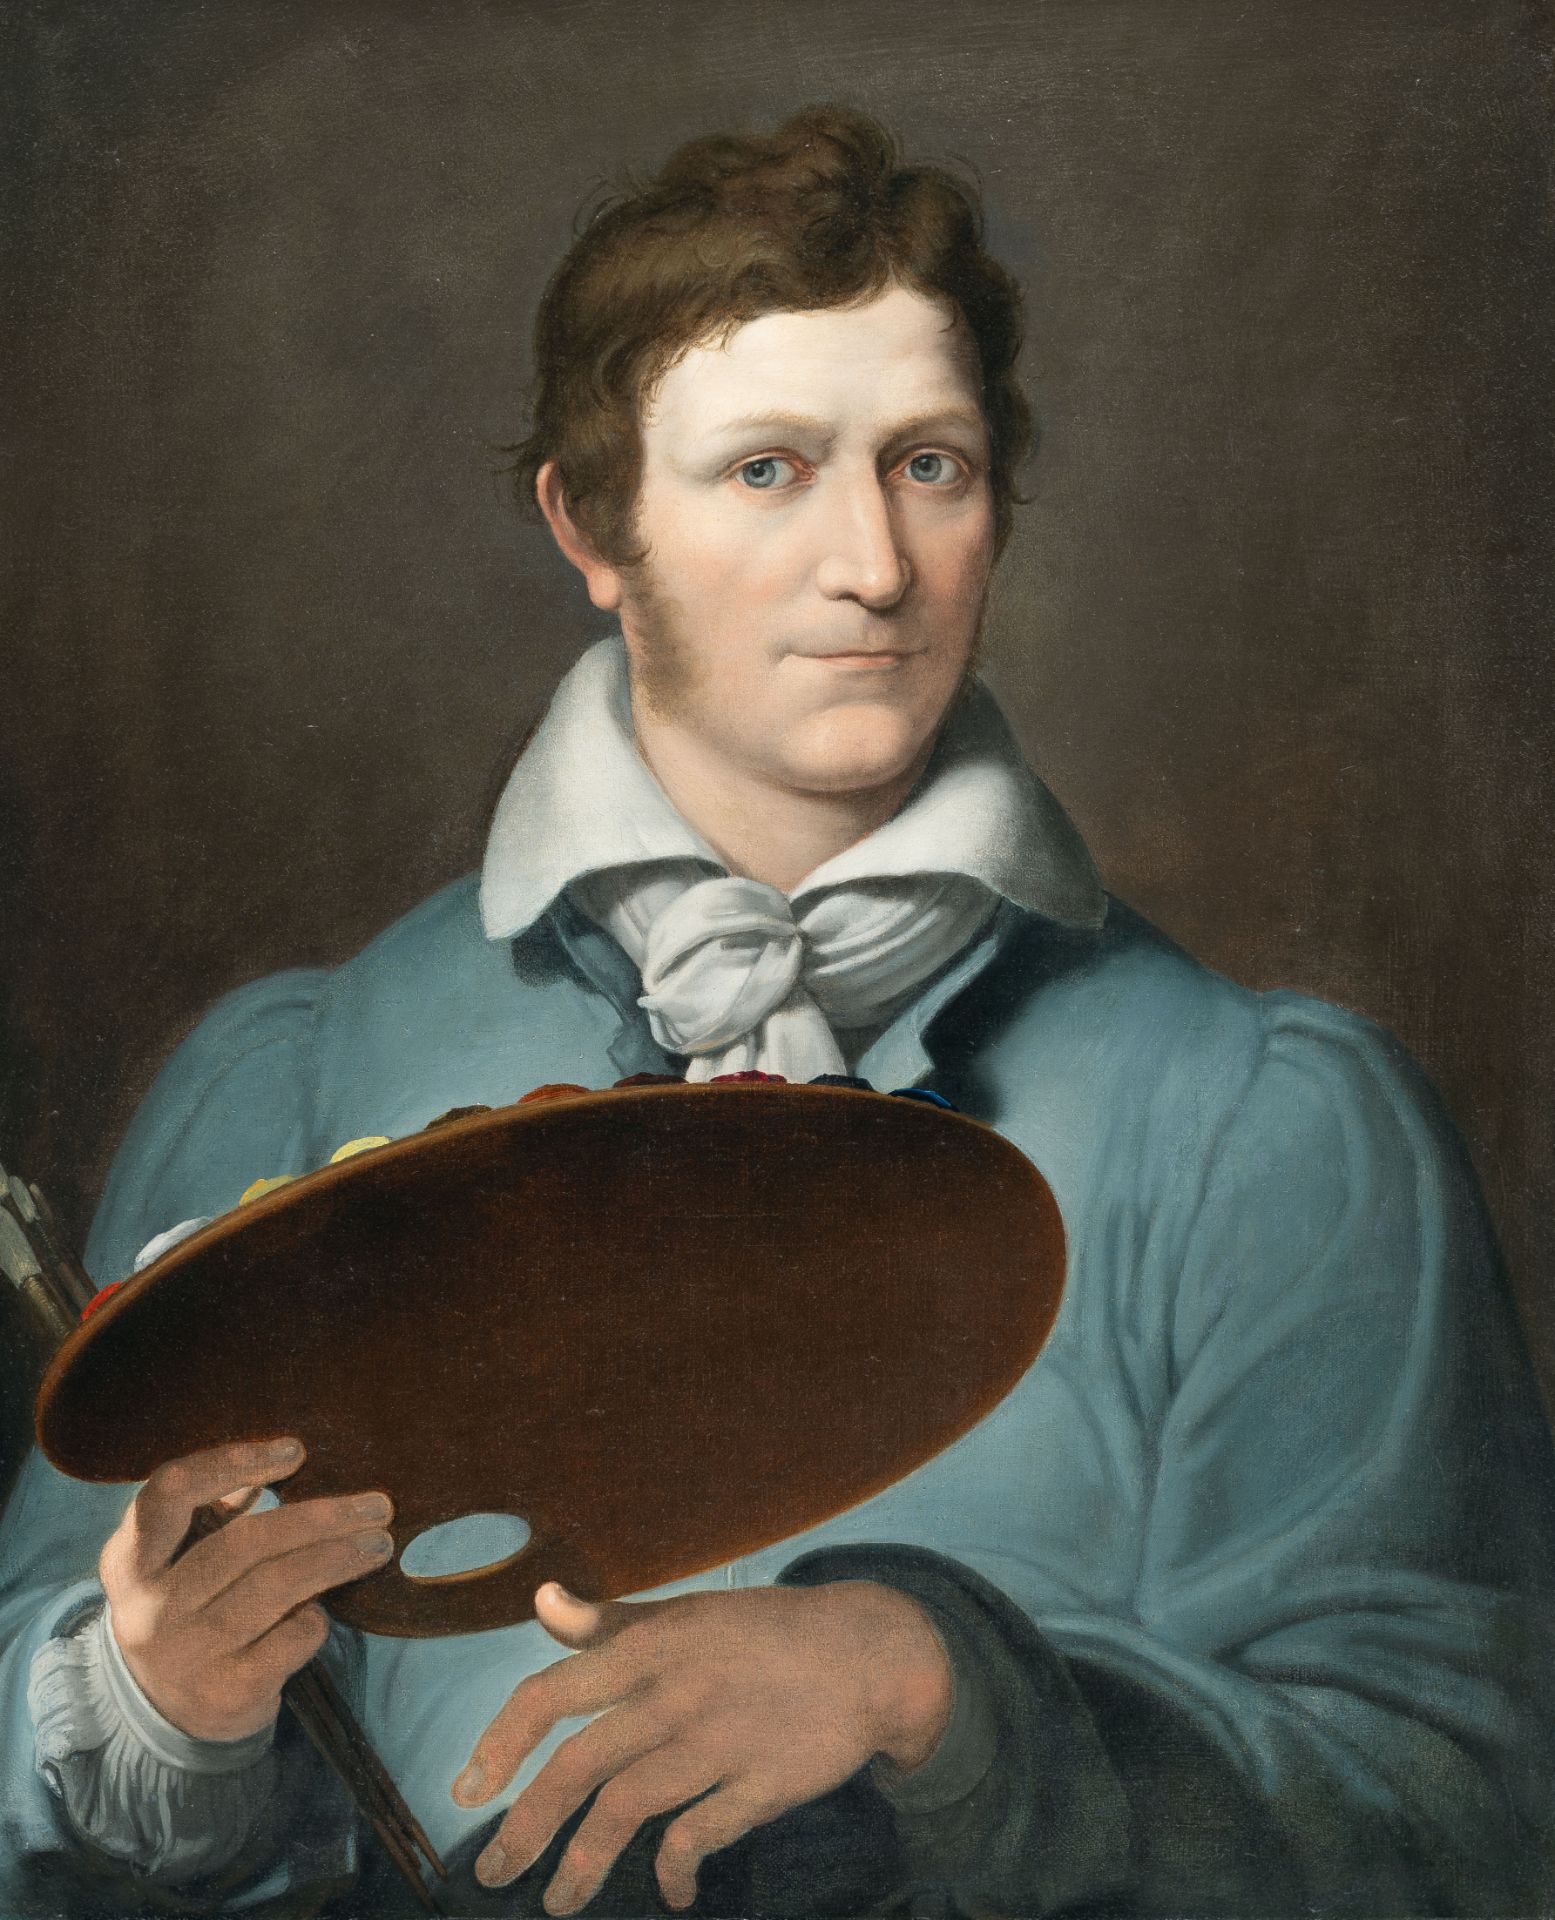 Dänisch, Self portrait with a palette.Oil on canvas. (Around 1820). 62.6 x 50.5 cm. In the